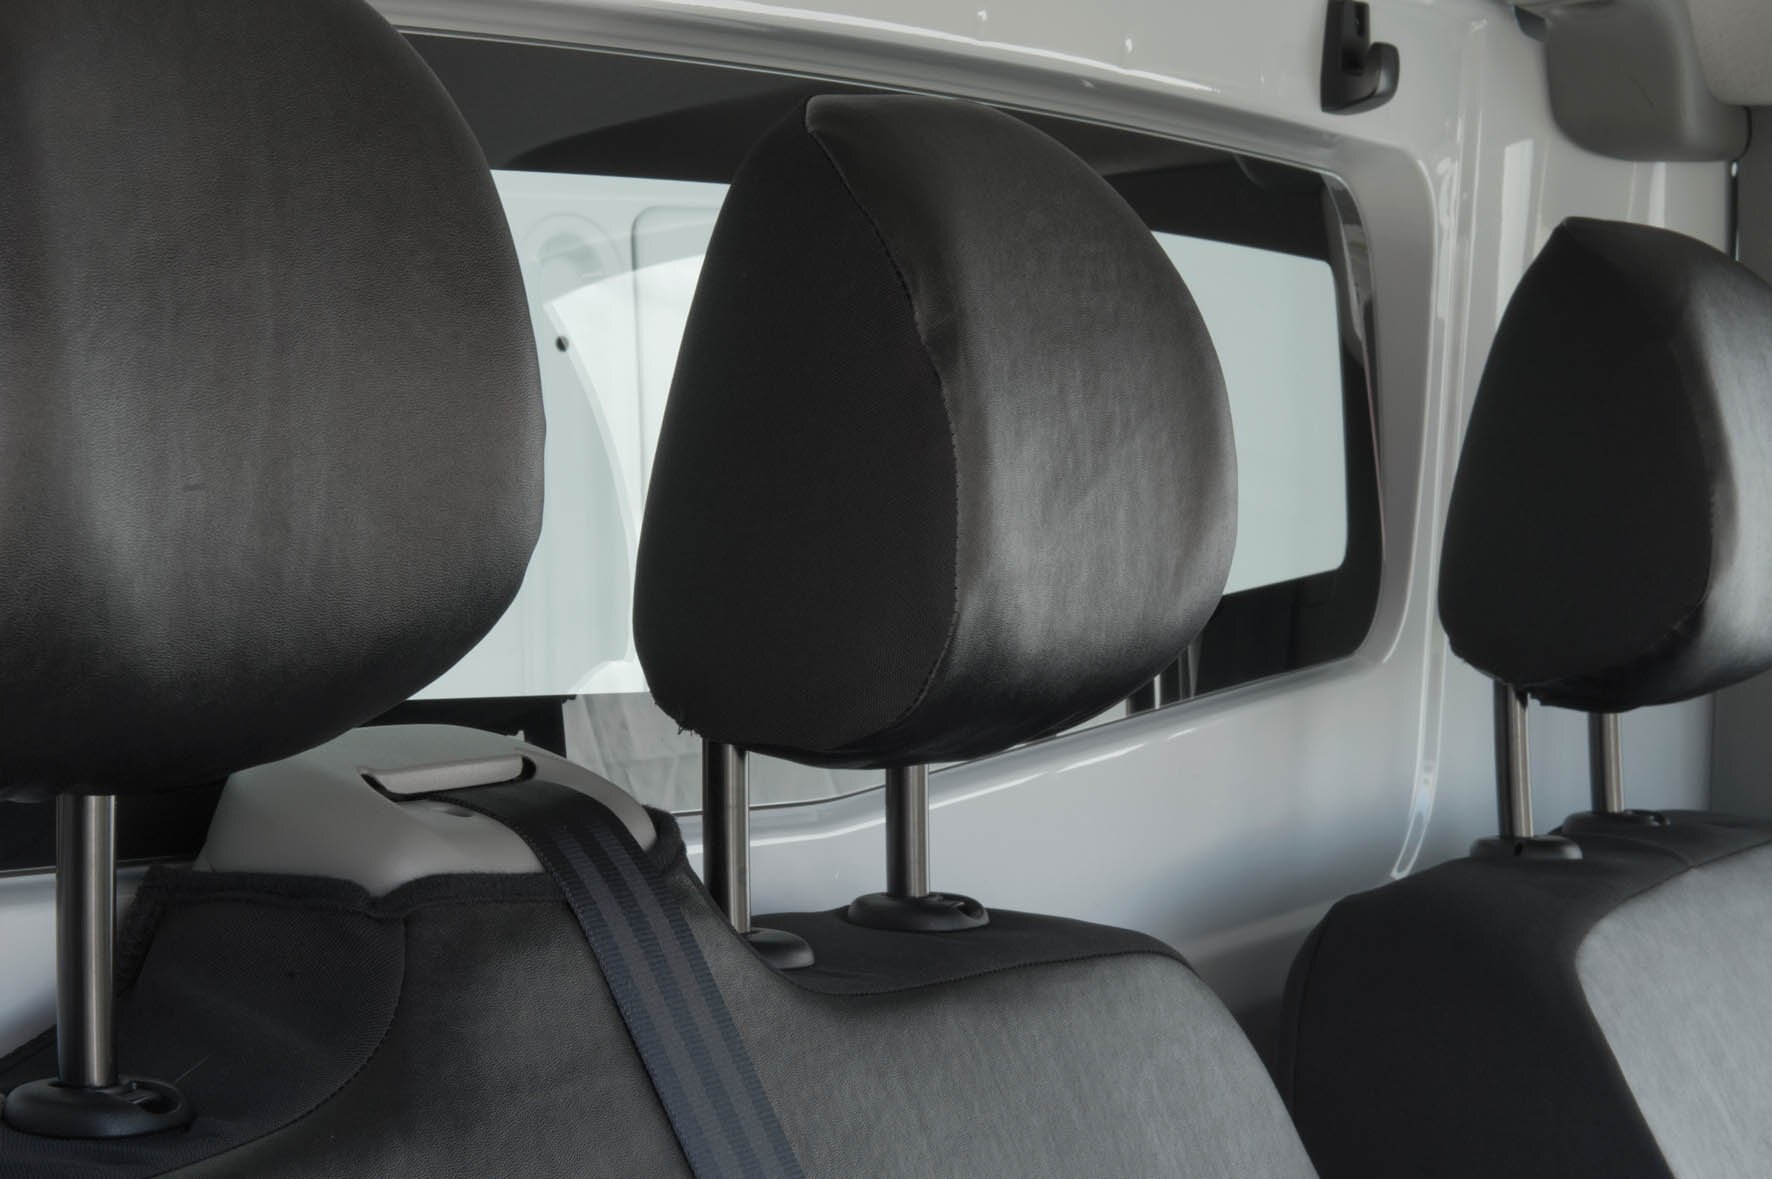 Transporter Coprisedili in similpelle per Renault Trafic II, Opel Vivaro, Nissan Primastar, sedile singolo e doppio